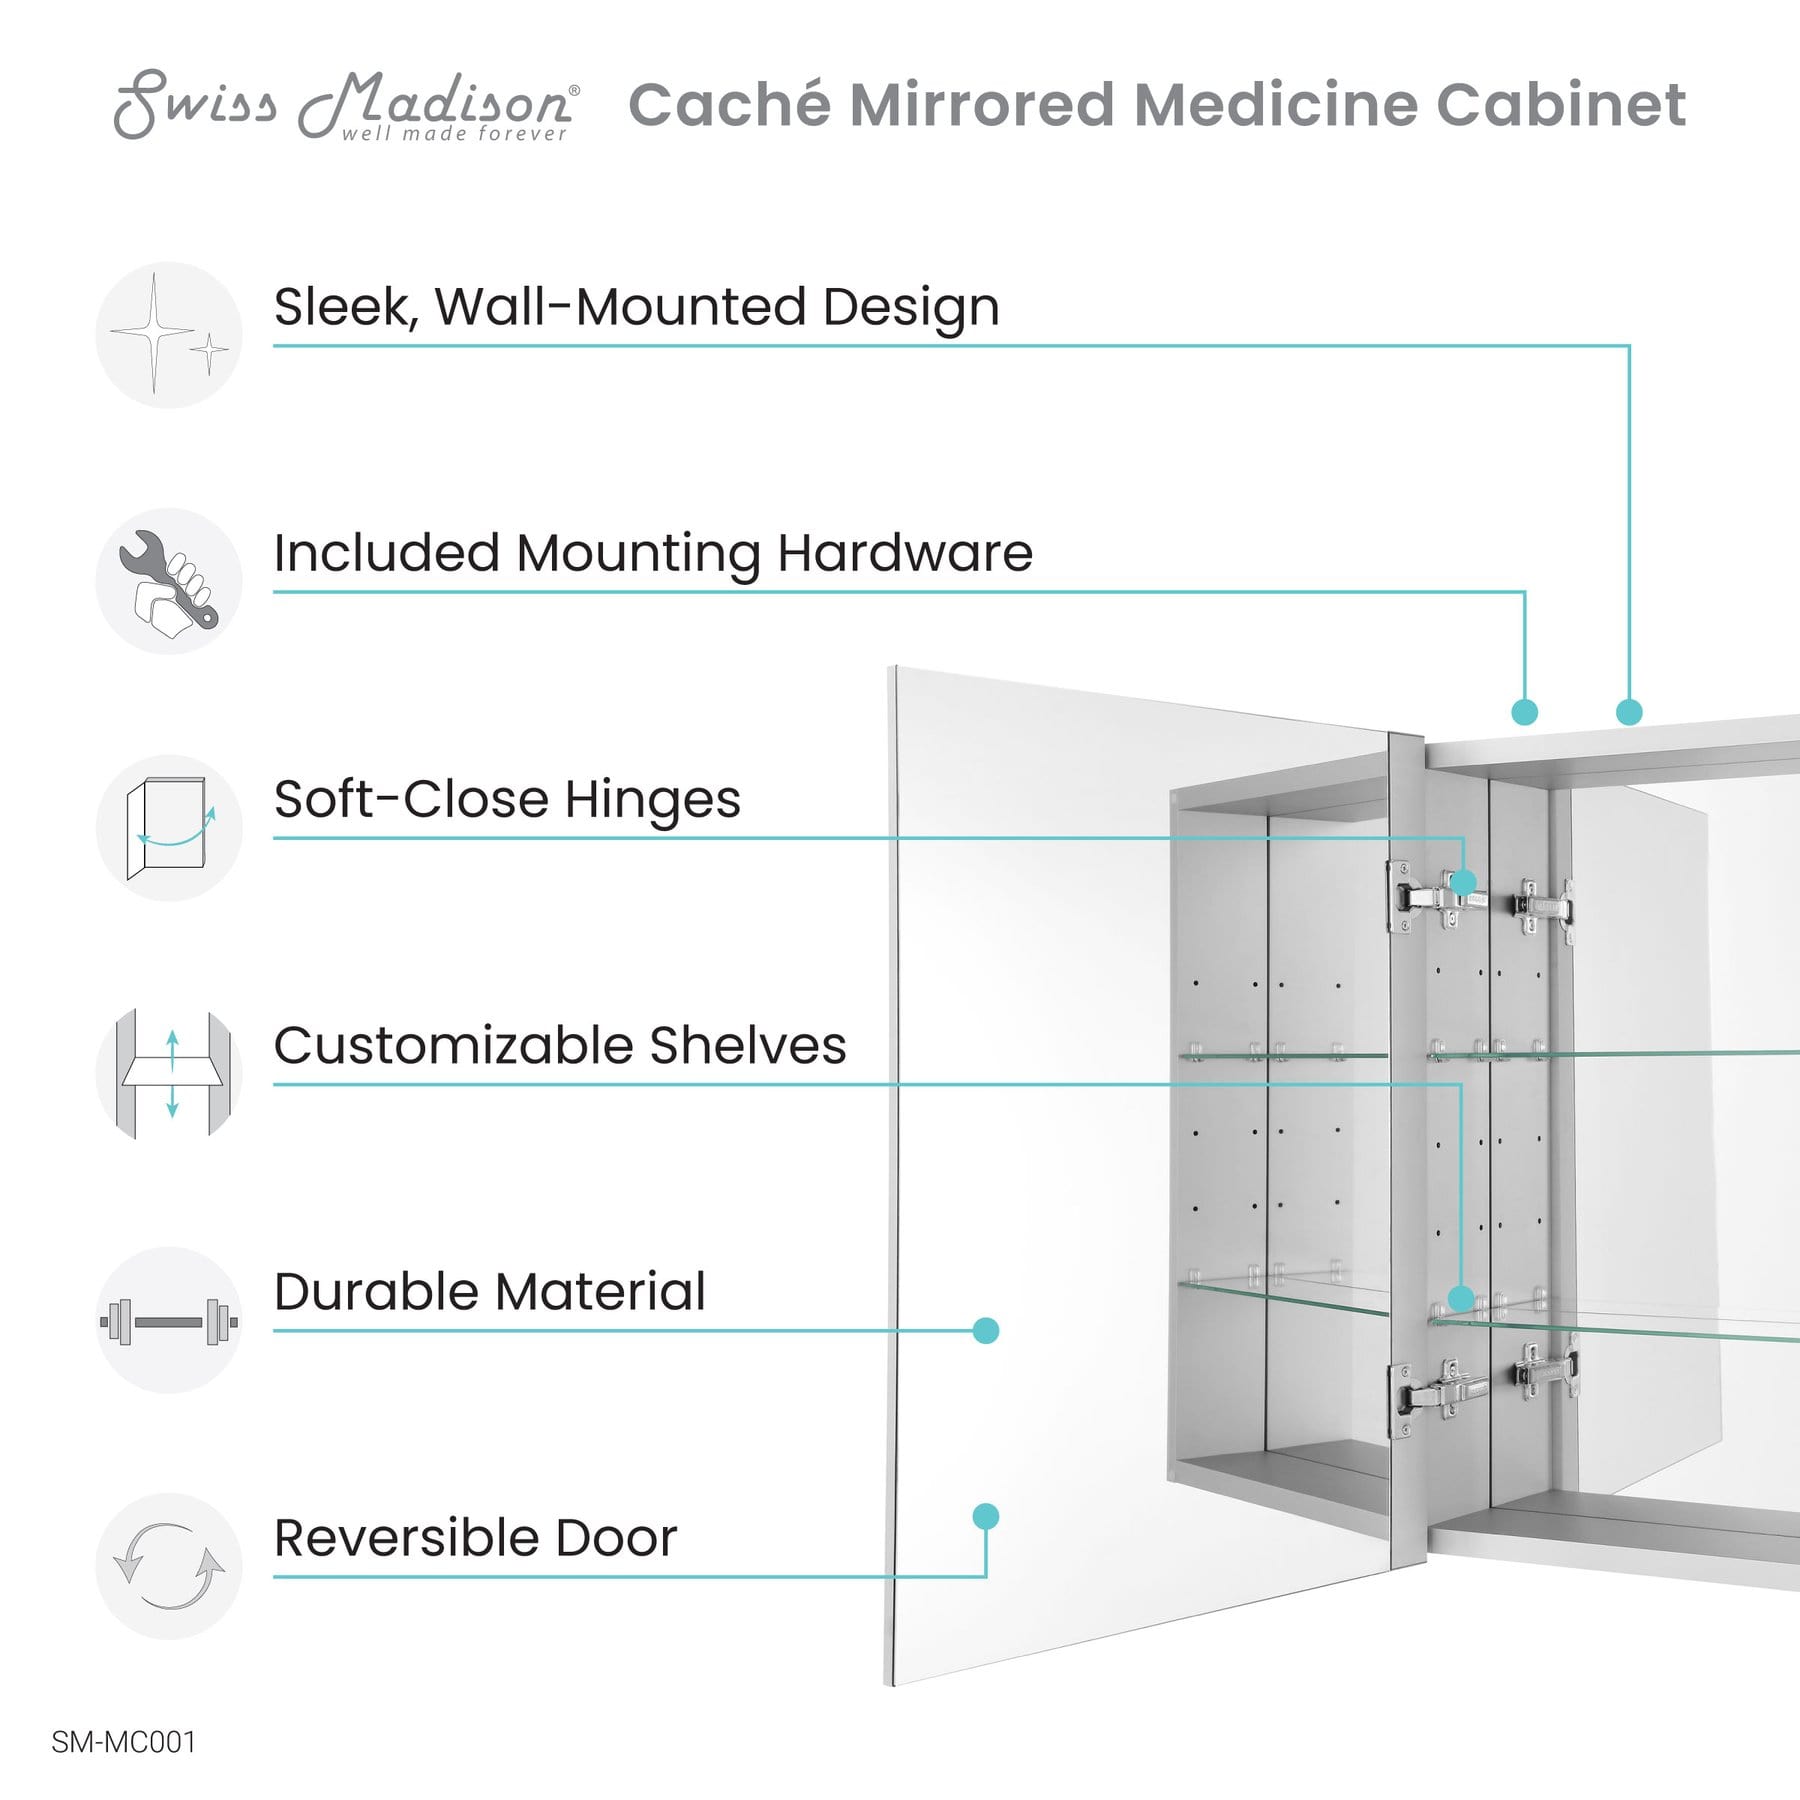 Swiss Madison Cache 20 in. x 30 in. Mirrored Aluminum Medicine Cabinet - SM-MC00 | molaix - Molaix723552143727AccessoriesSM-MC001